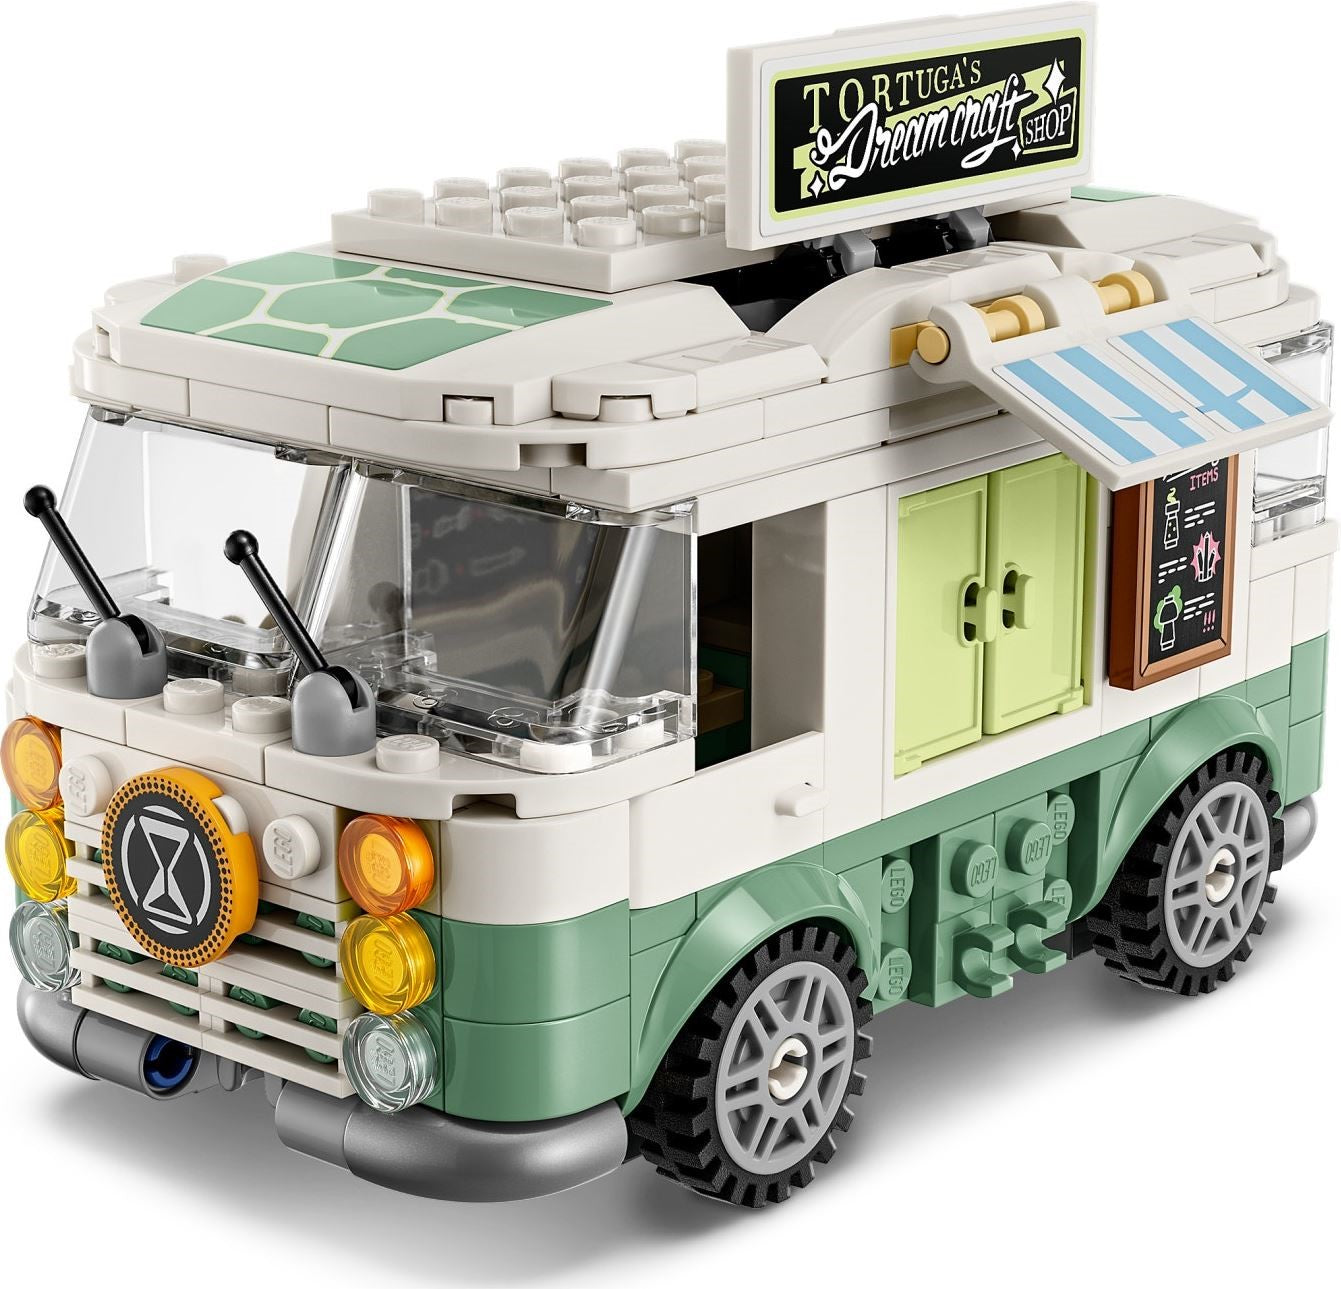 LEGO Dreamzzz 71456 Rouva Castillon Kilpikonna-auto